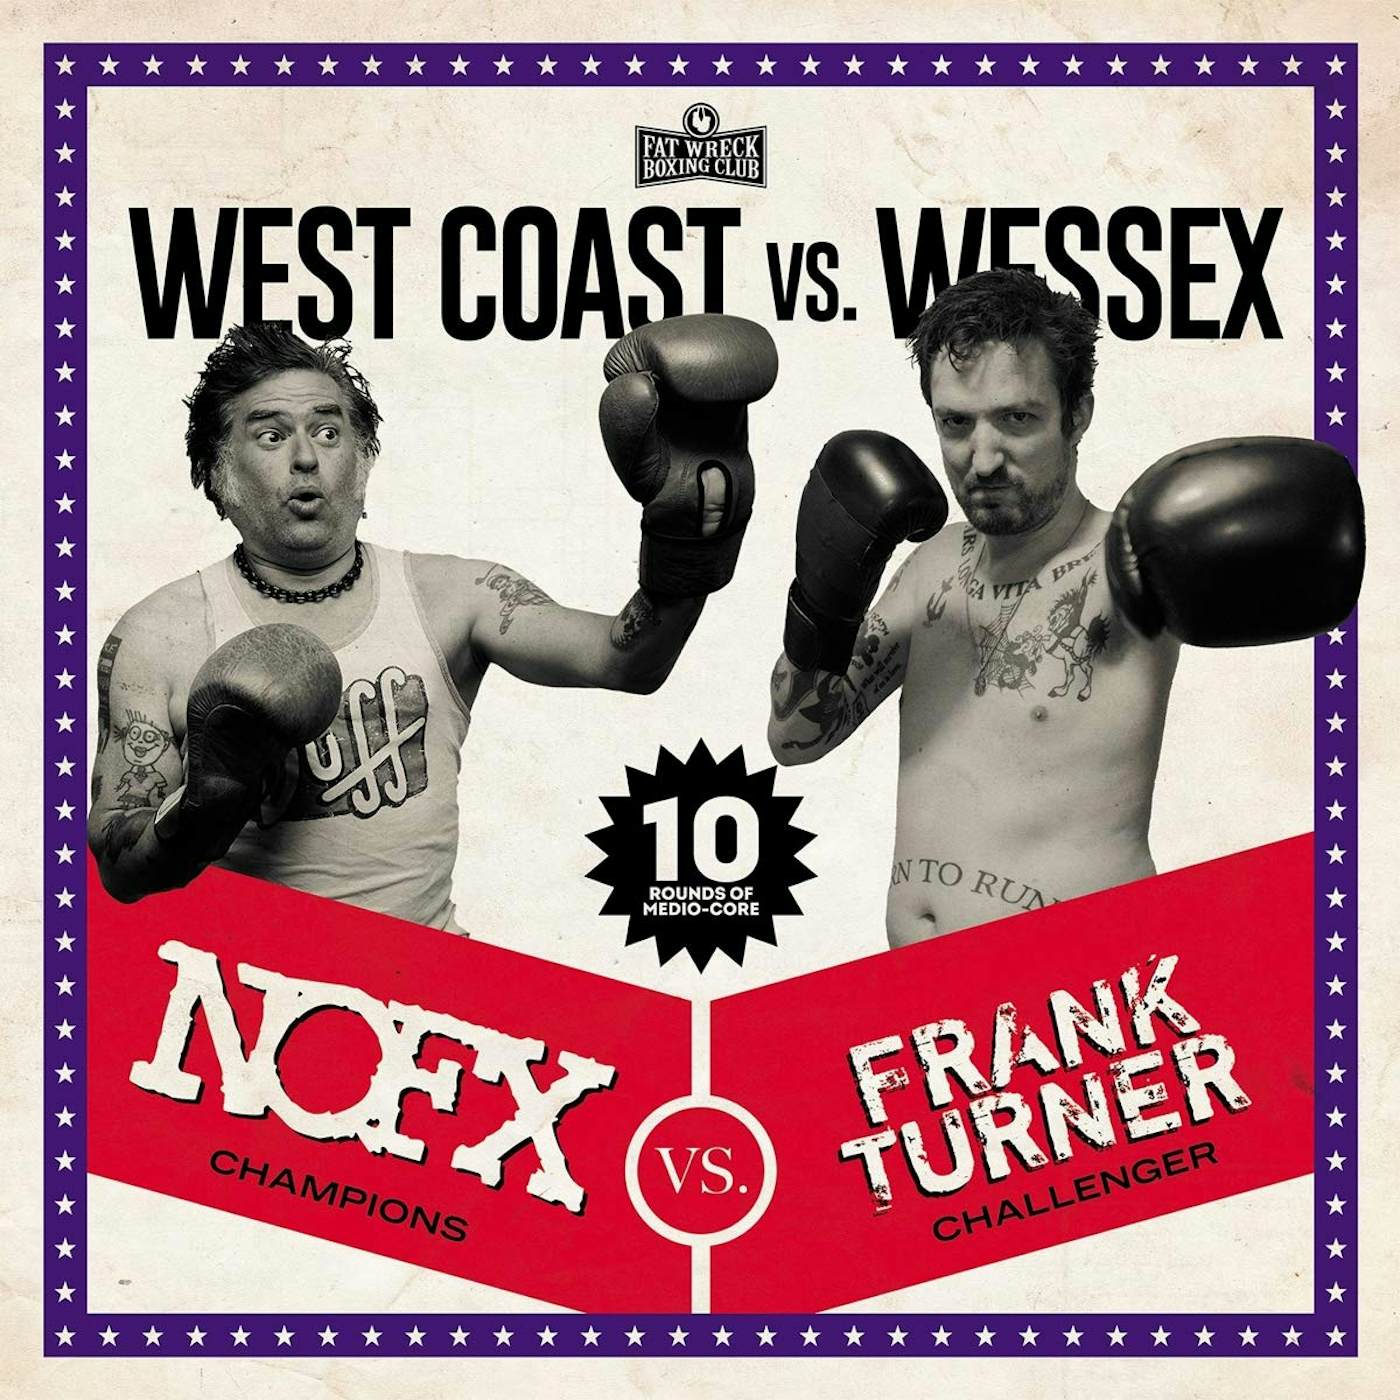 NOFX West Coast vs. Wessex Vinyl Record